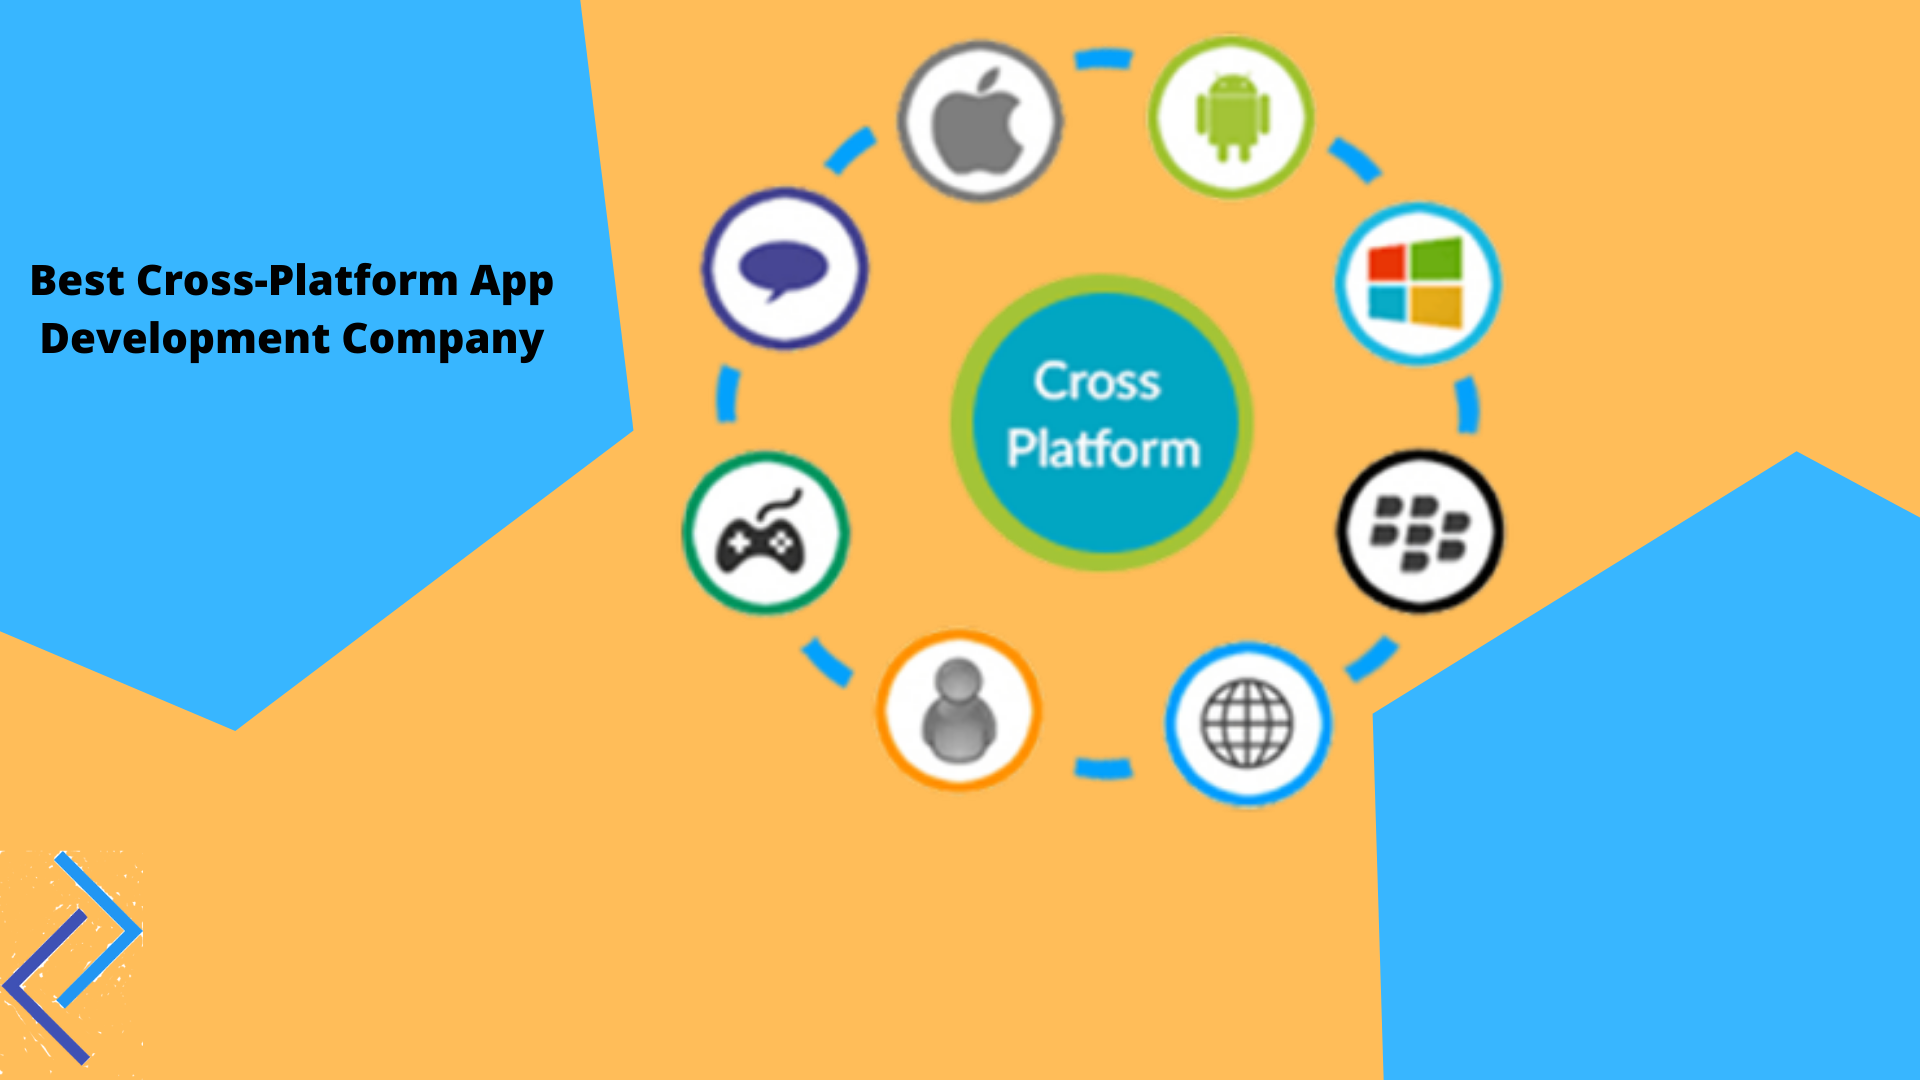 Cross-Platform App Development company